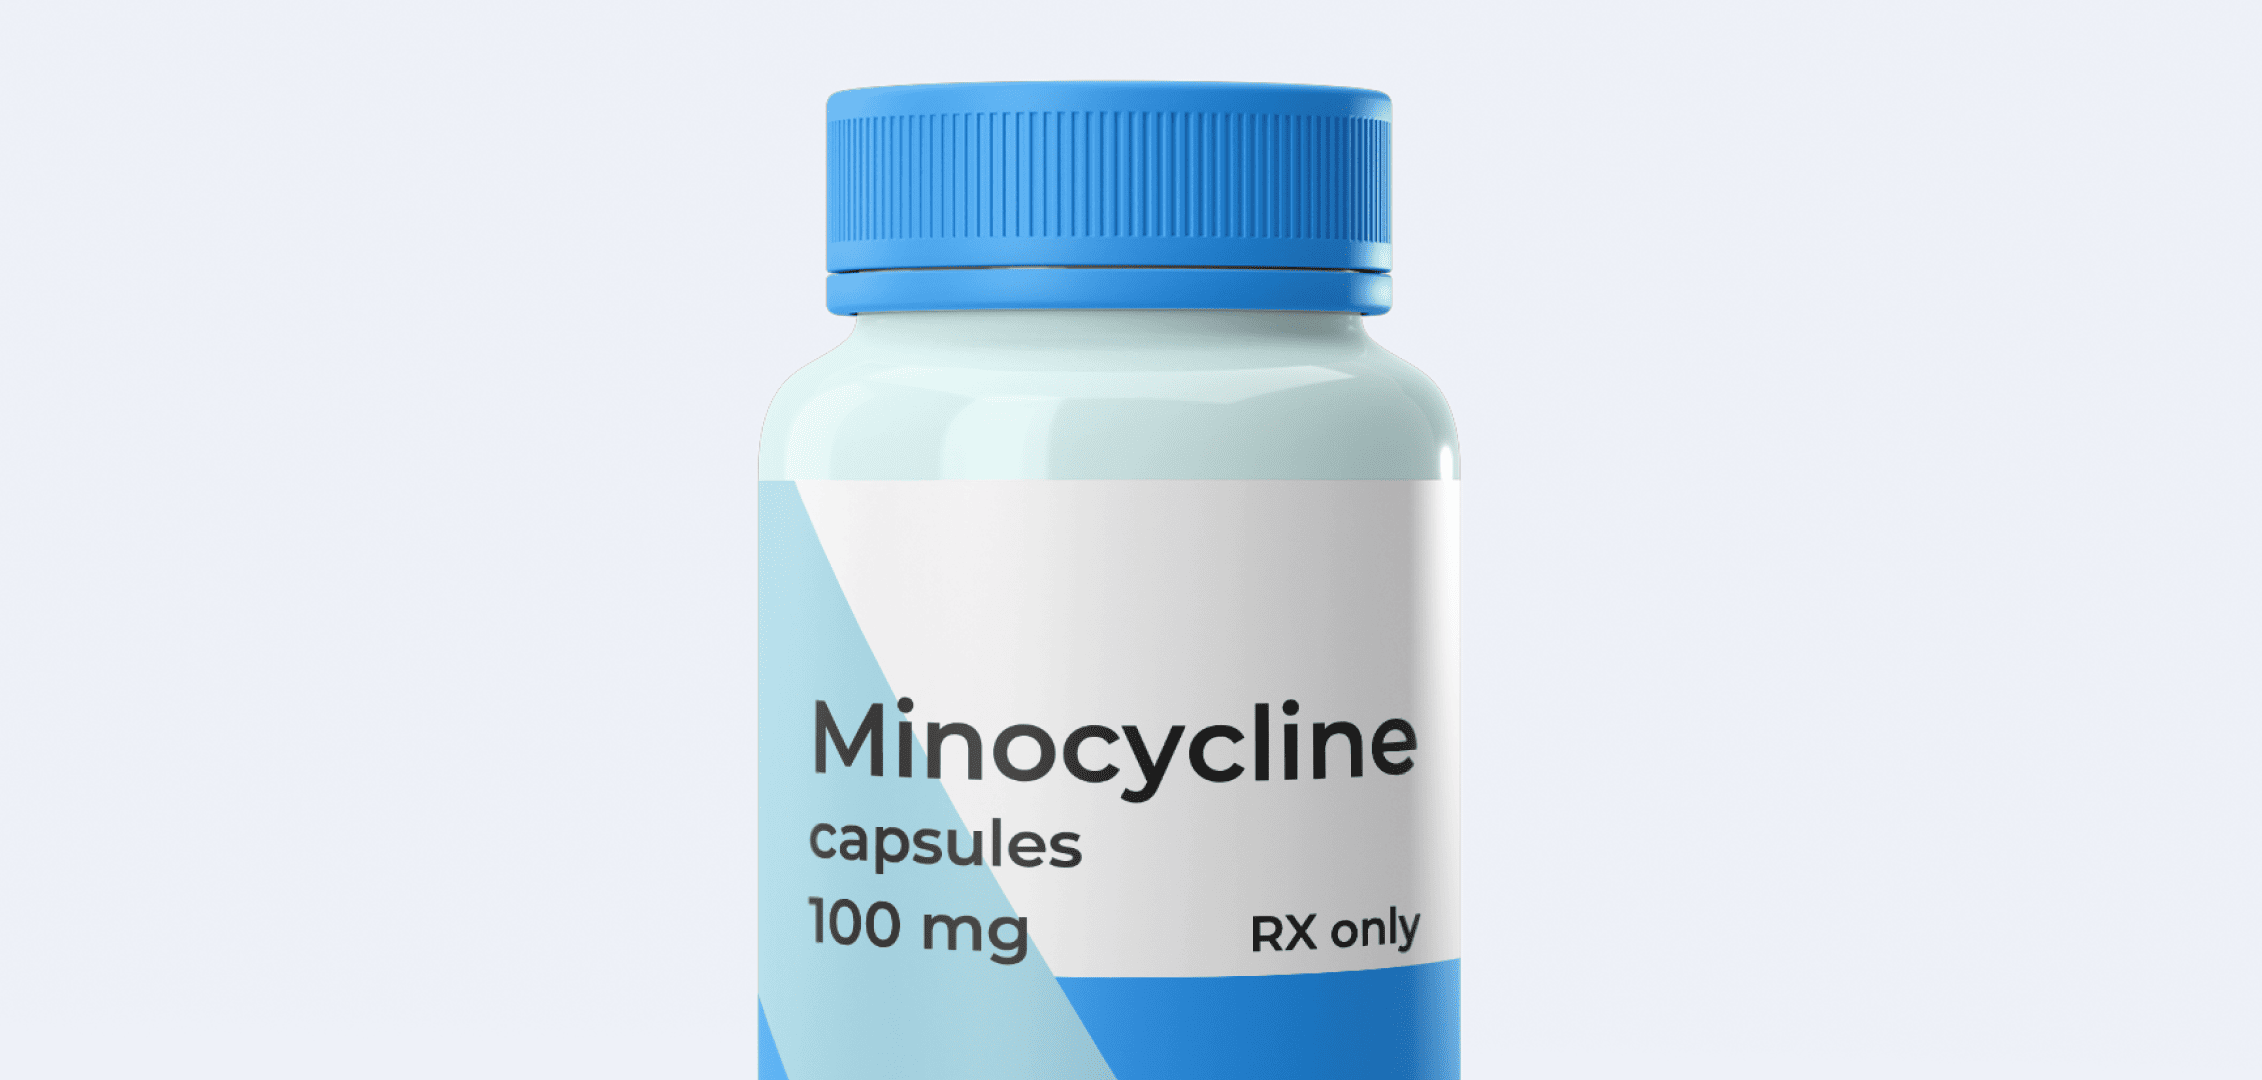 minocycline prescription for acne